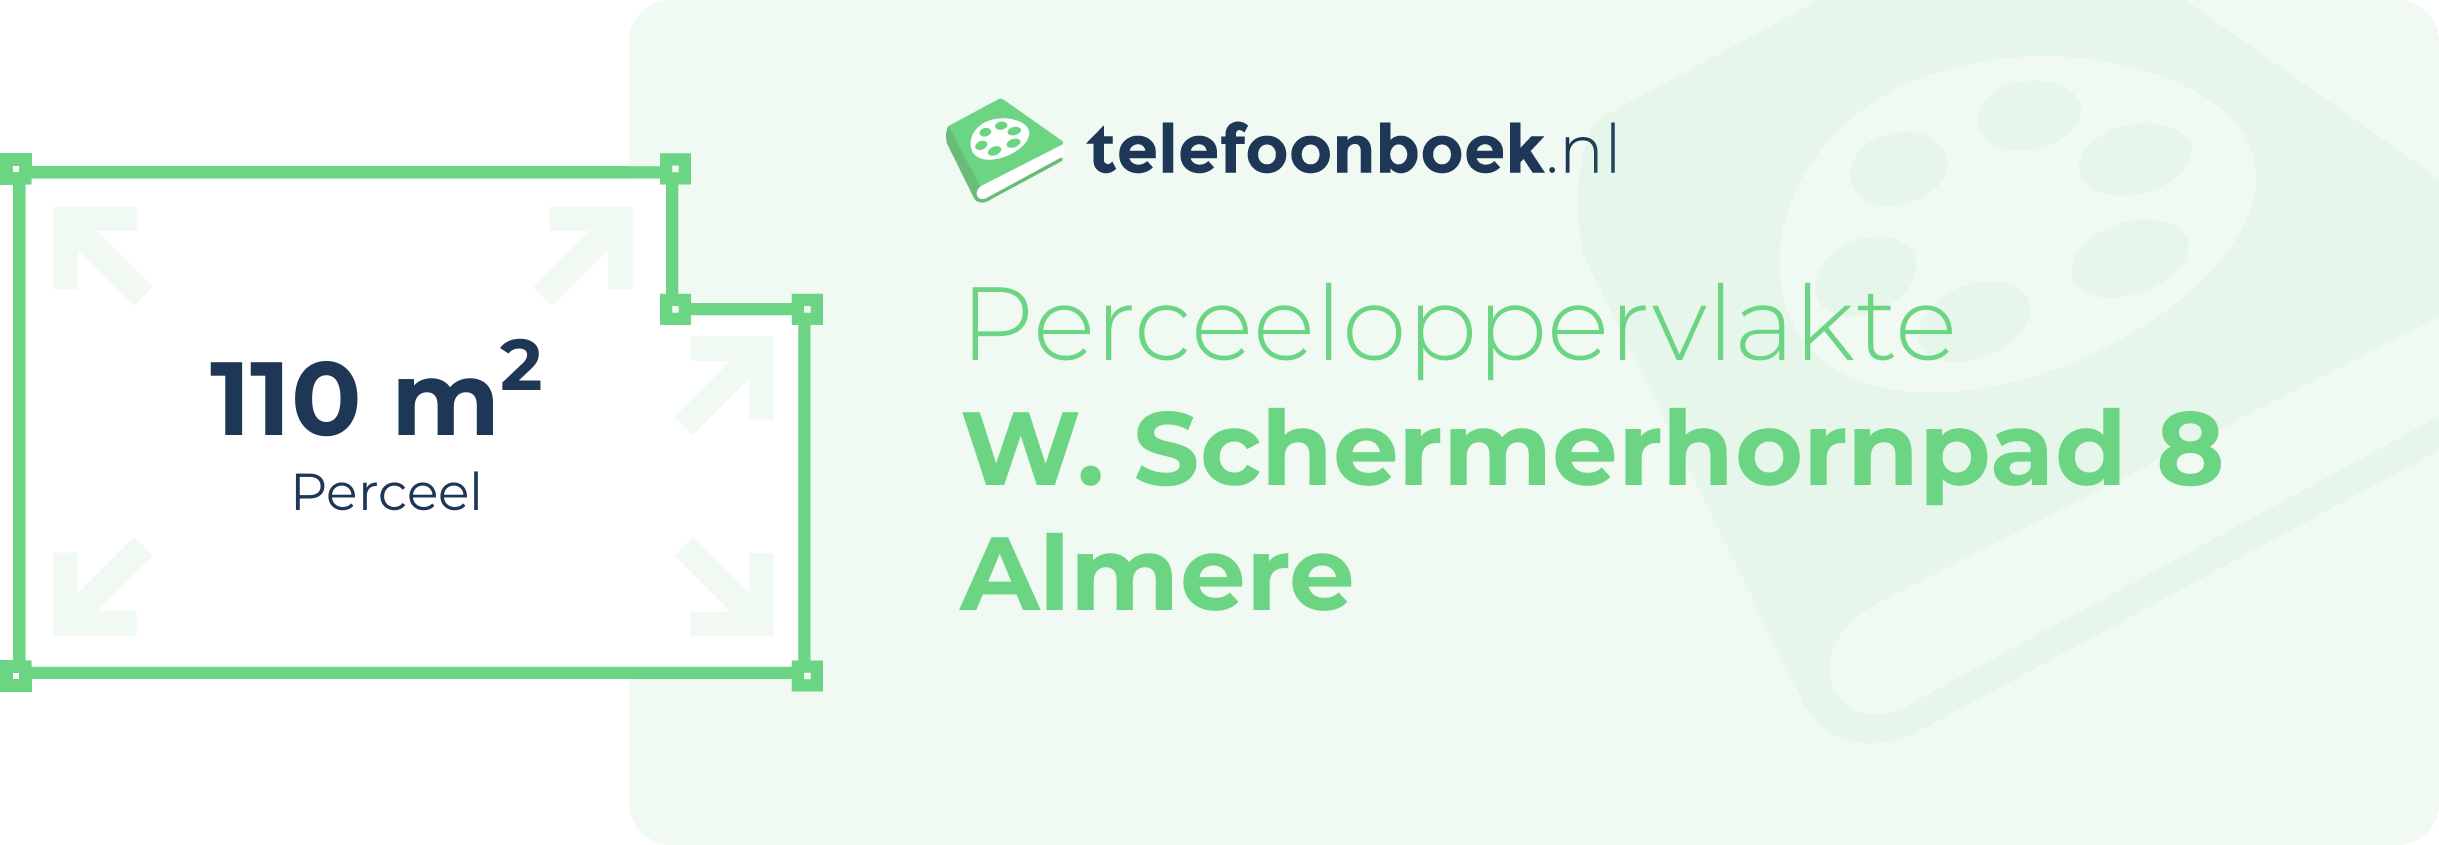 Perceeloppervlakte W. Schermerhornpad 8 Almere